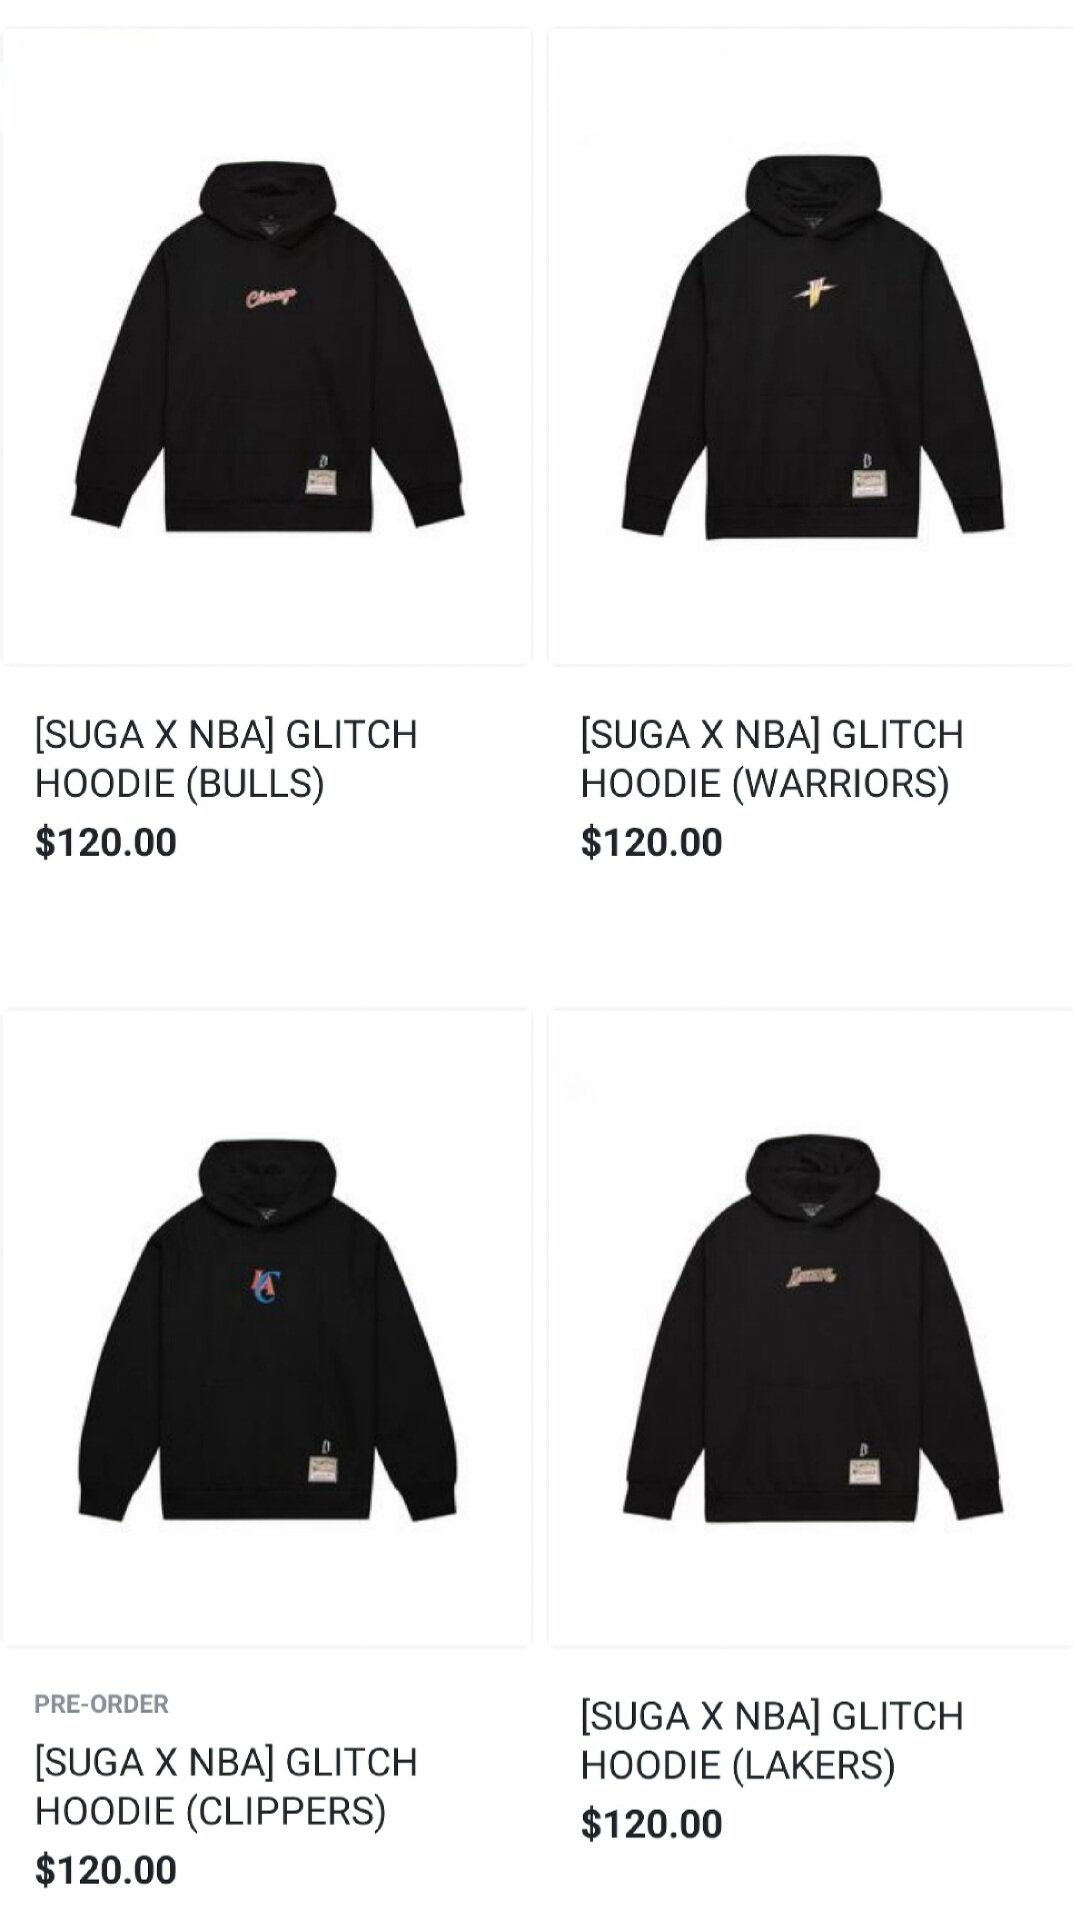 [MERCH] SUGA x NBA Merchandise Capsule Collection — US BTS ARMY